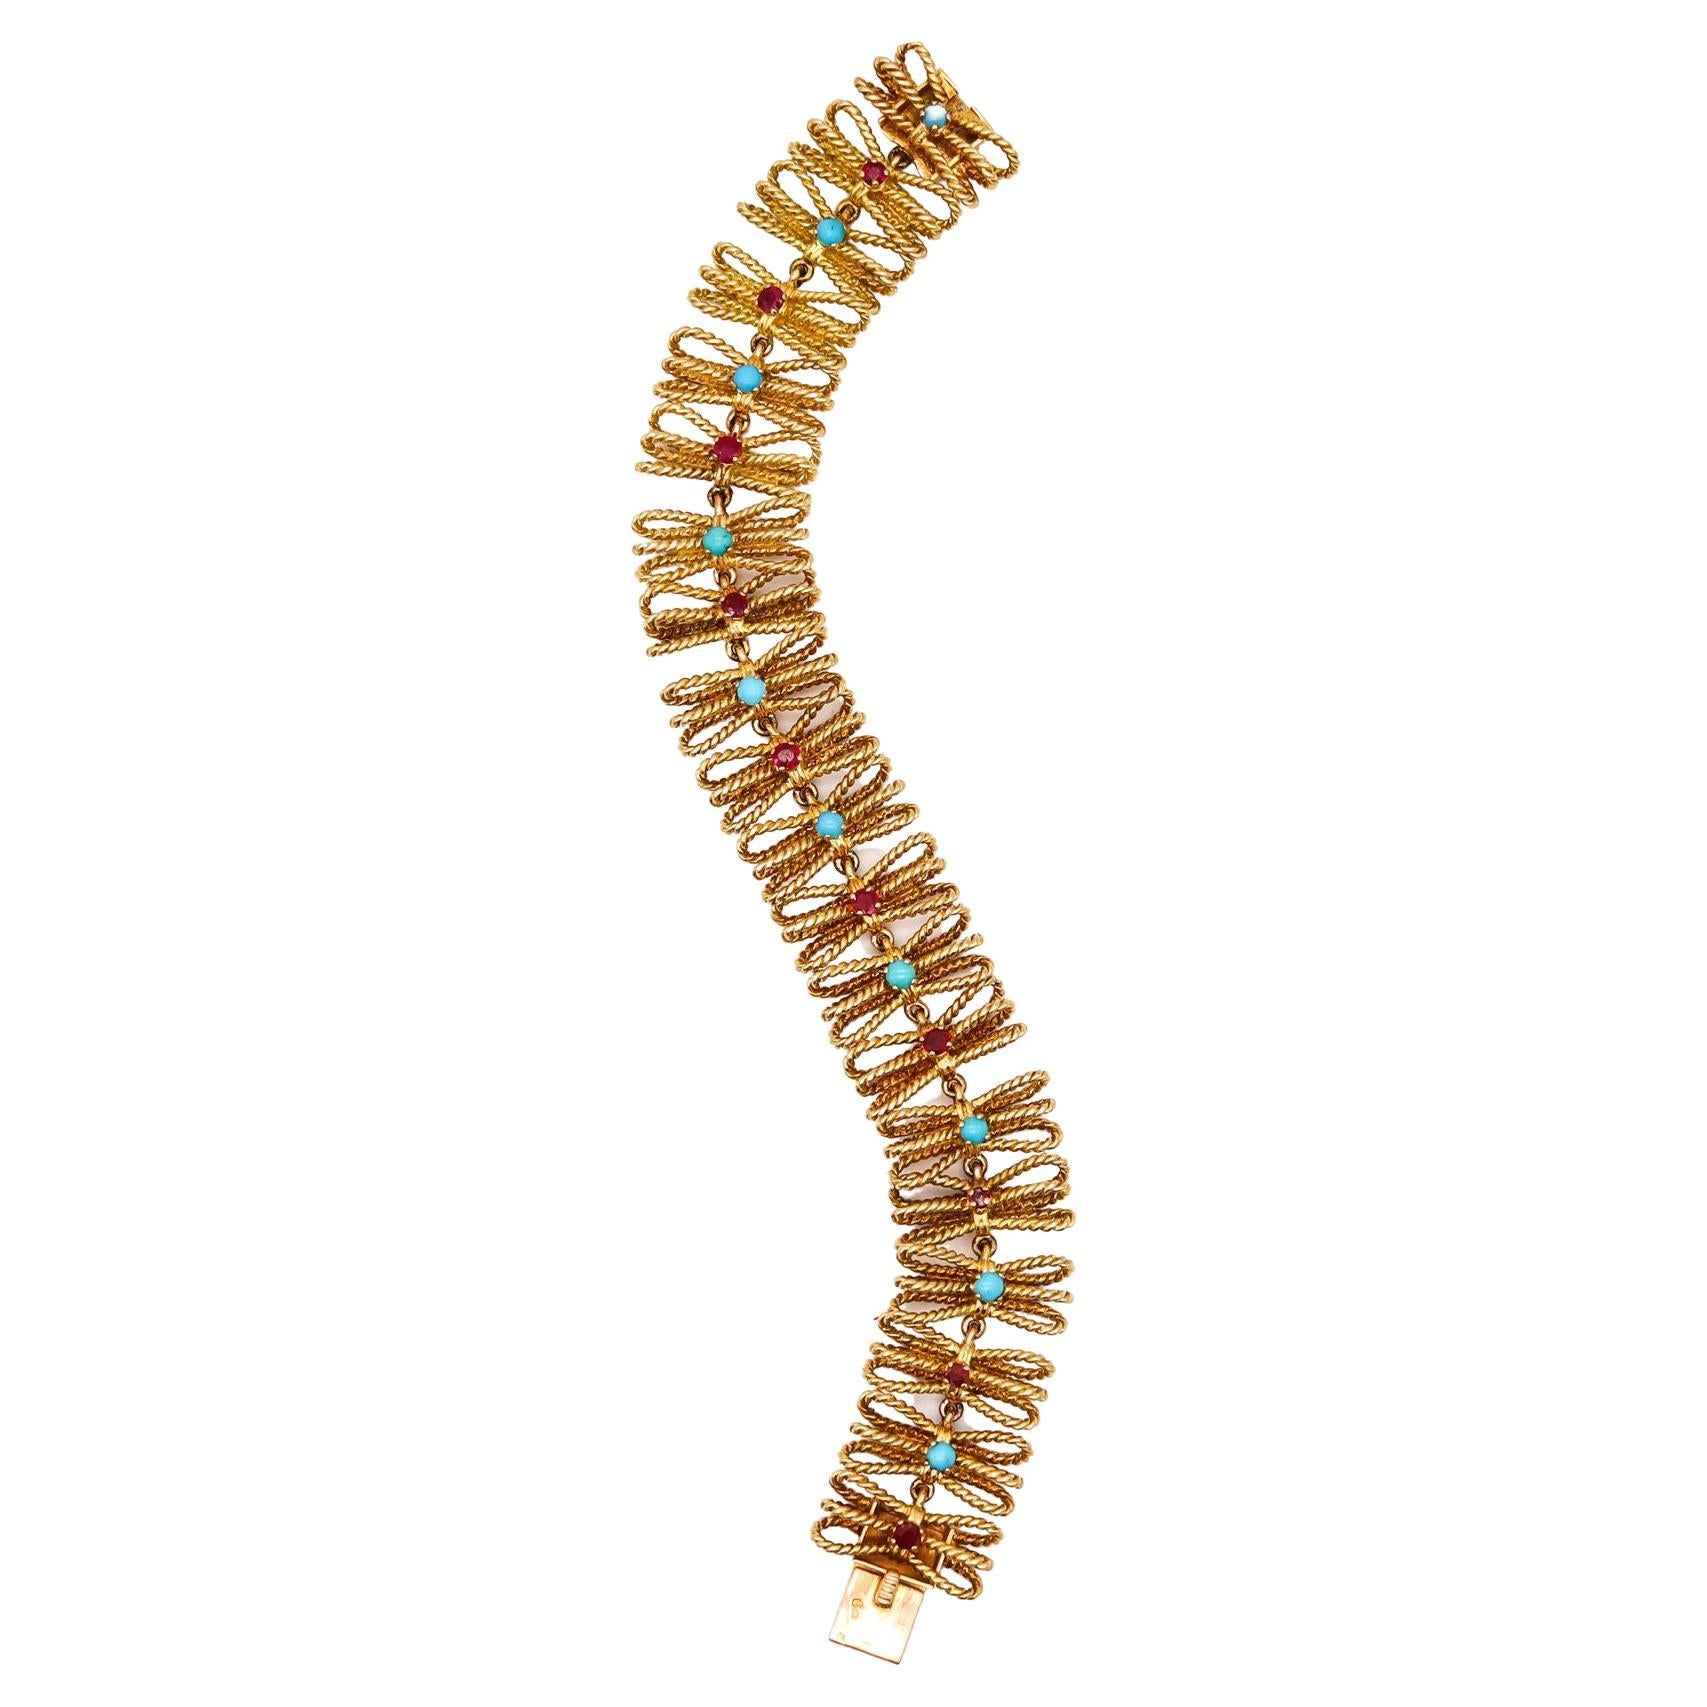 Mellerio-Dits Meller 1950 Paris Twisted Bracelet in 18kt Gold with 2.55ctw Gems